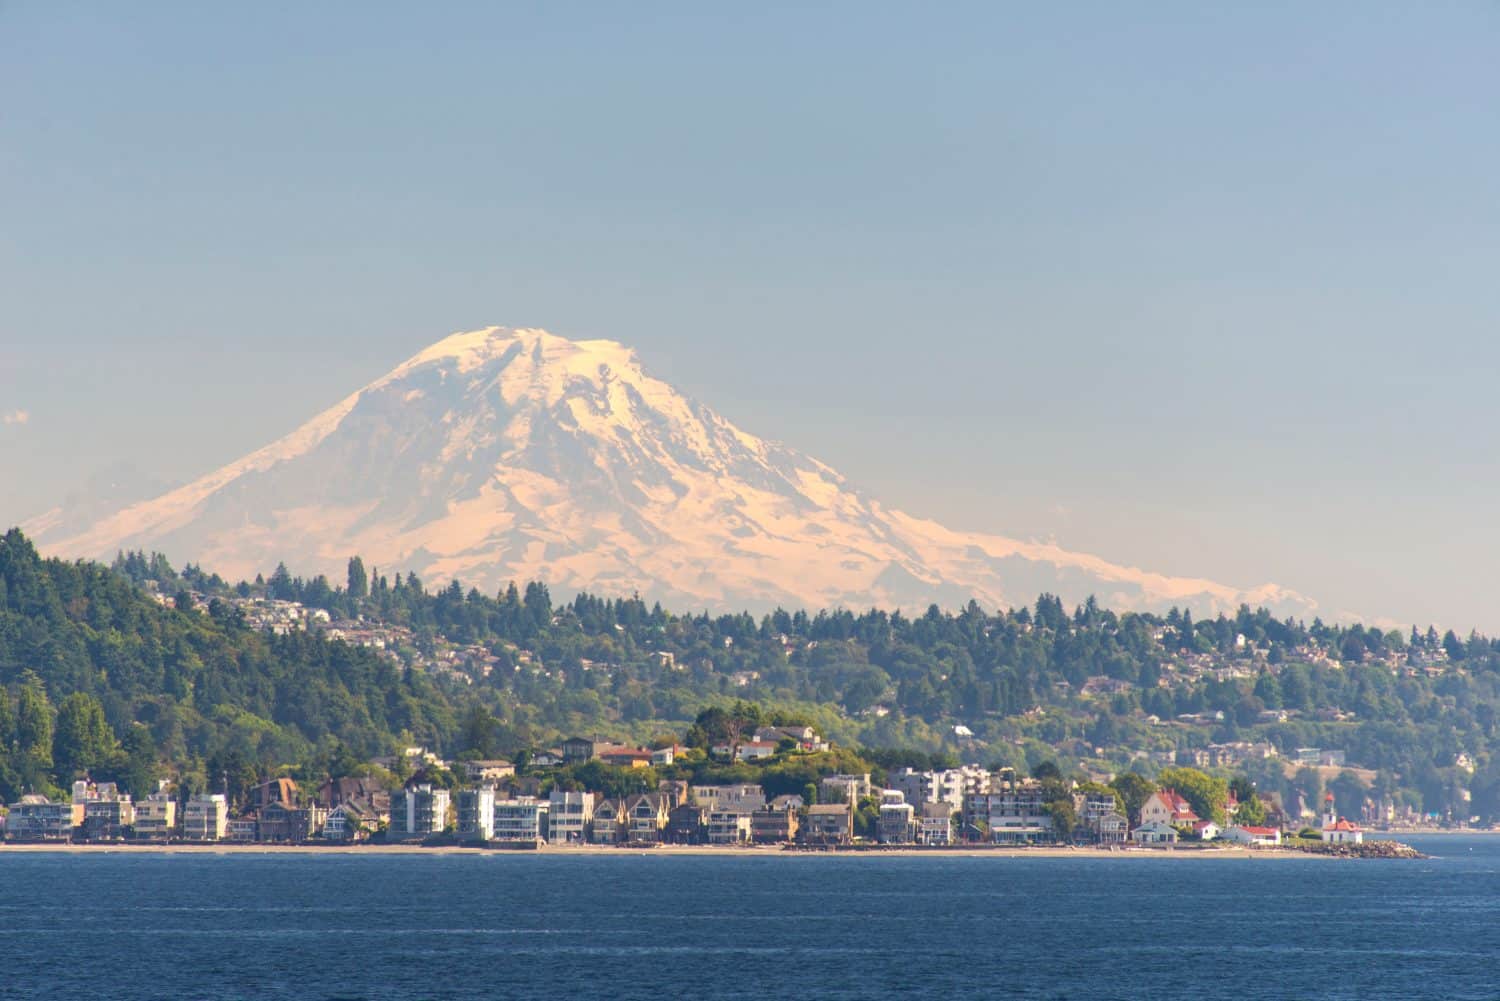 USA, Washington State, Seattle. View of Mount Rainier beyond West Seattle and Alki Beach.